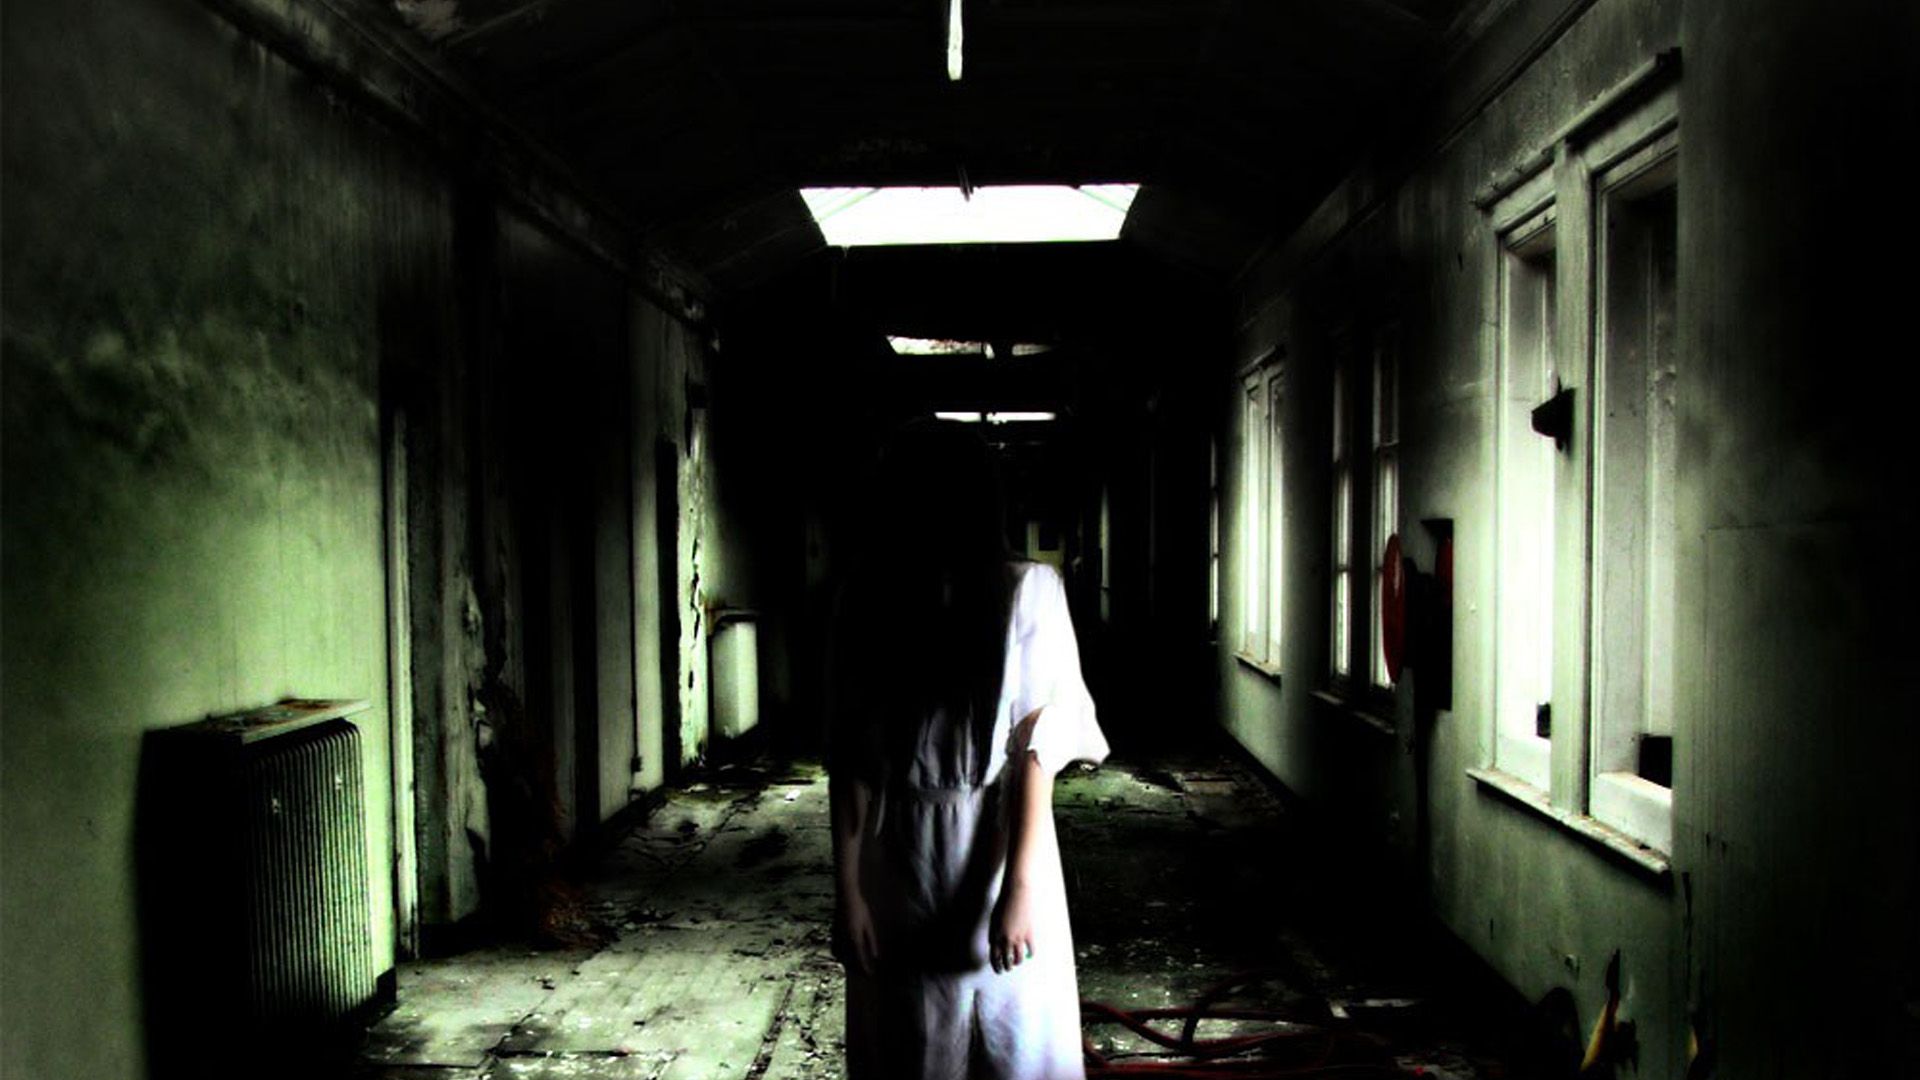 Wallpapers Scary Hospital Hd 1920x1080 #scary hospital